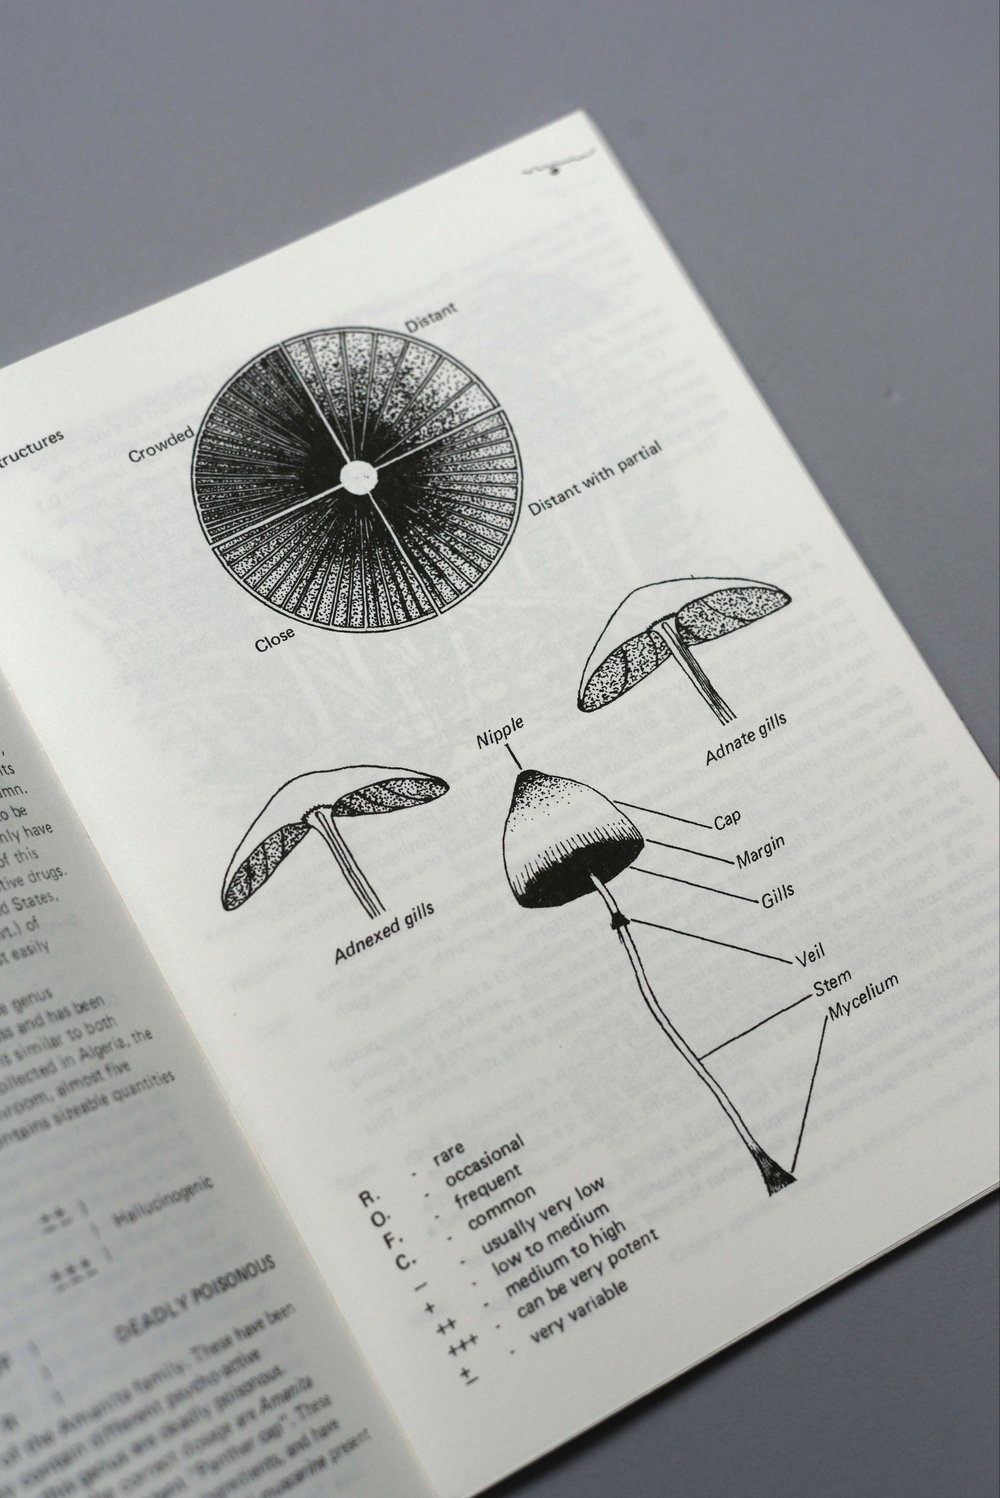 A guide to British psilocybin mushrooms 